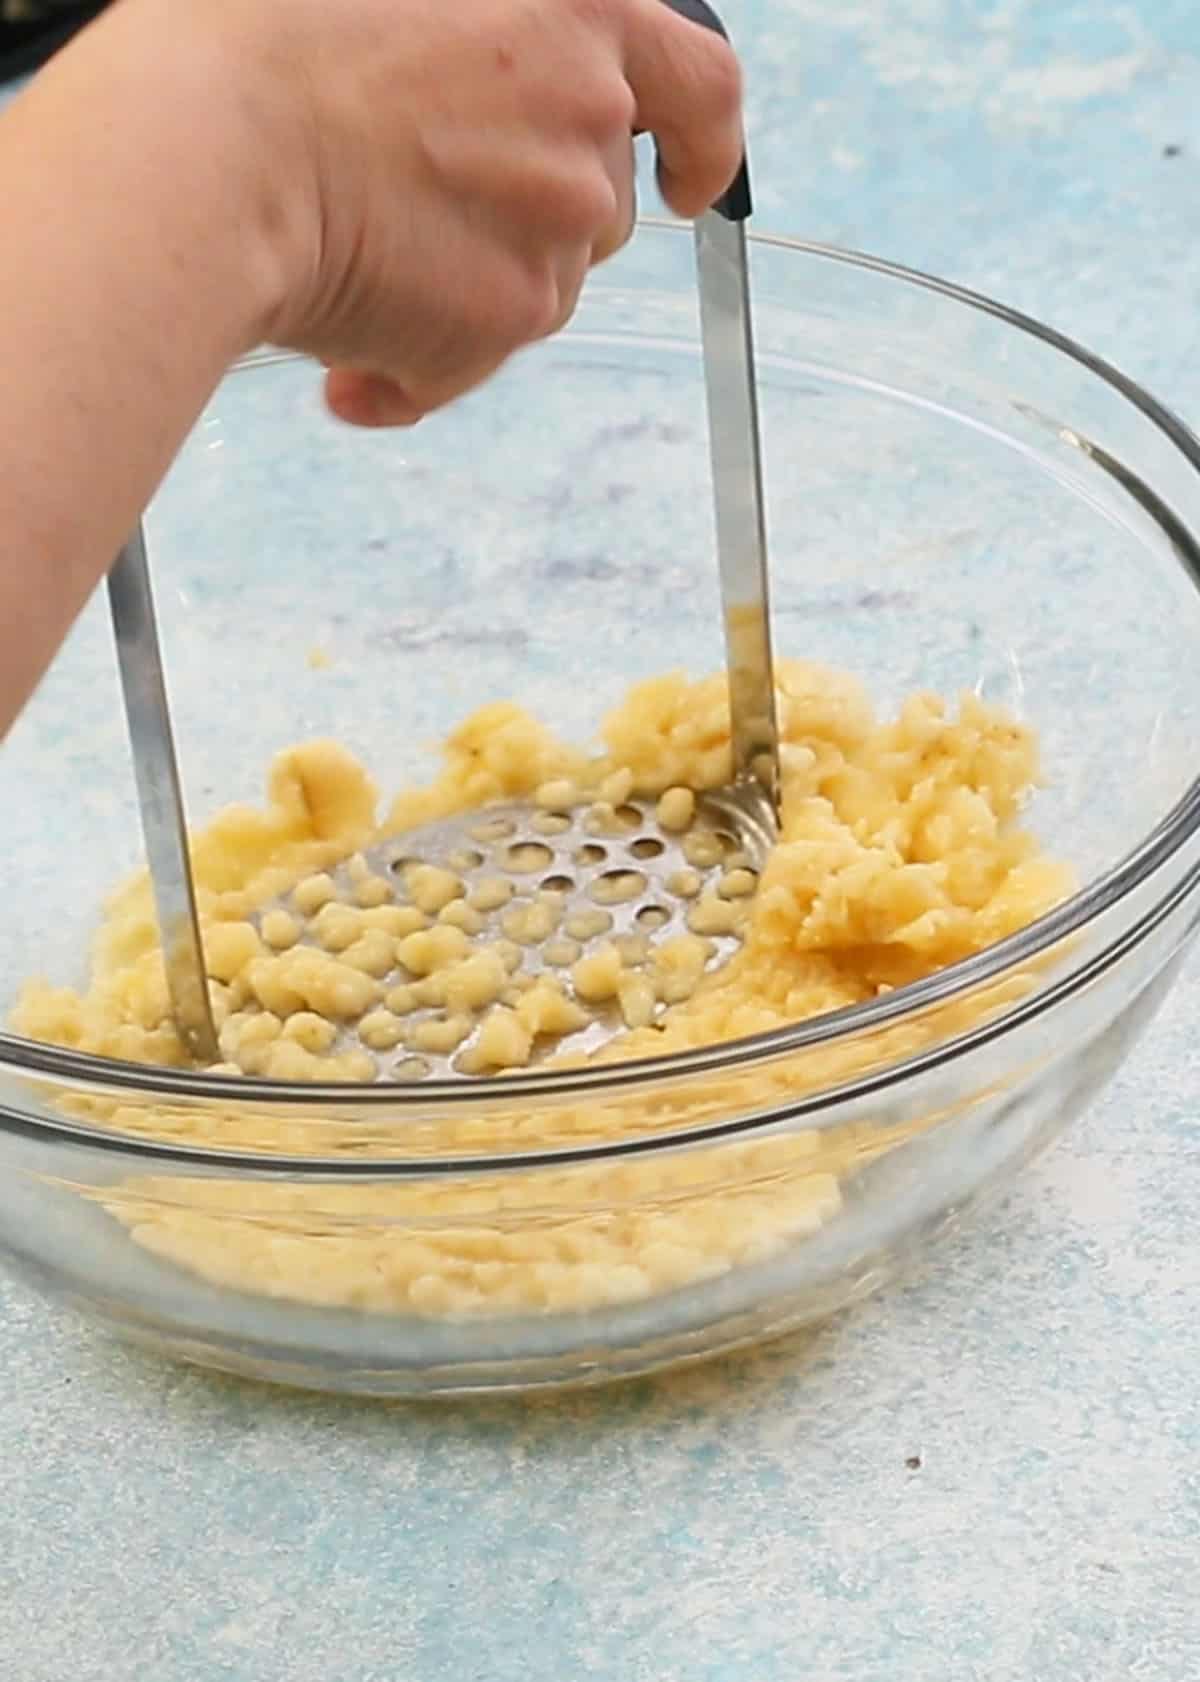 a hand mashing bananas in a glass bowl using a potato masher.